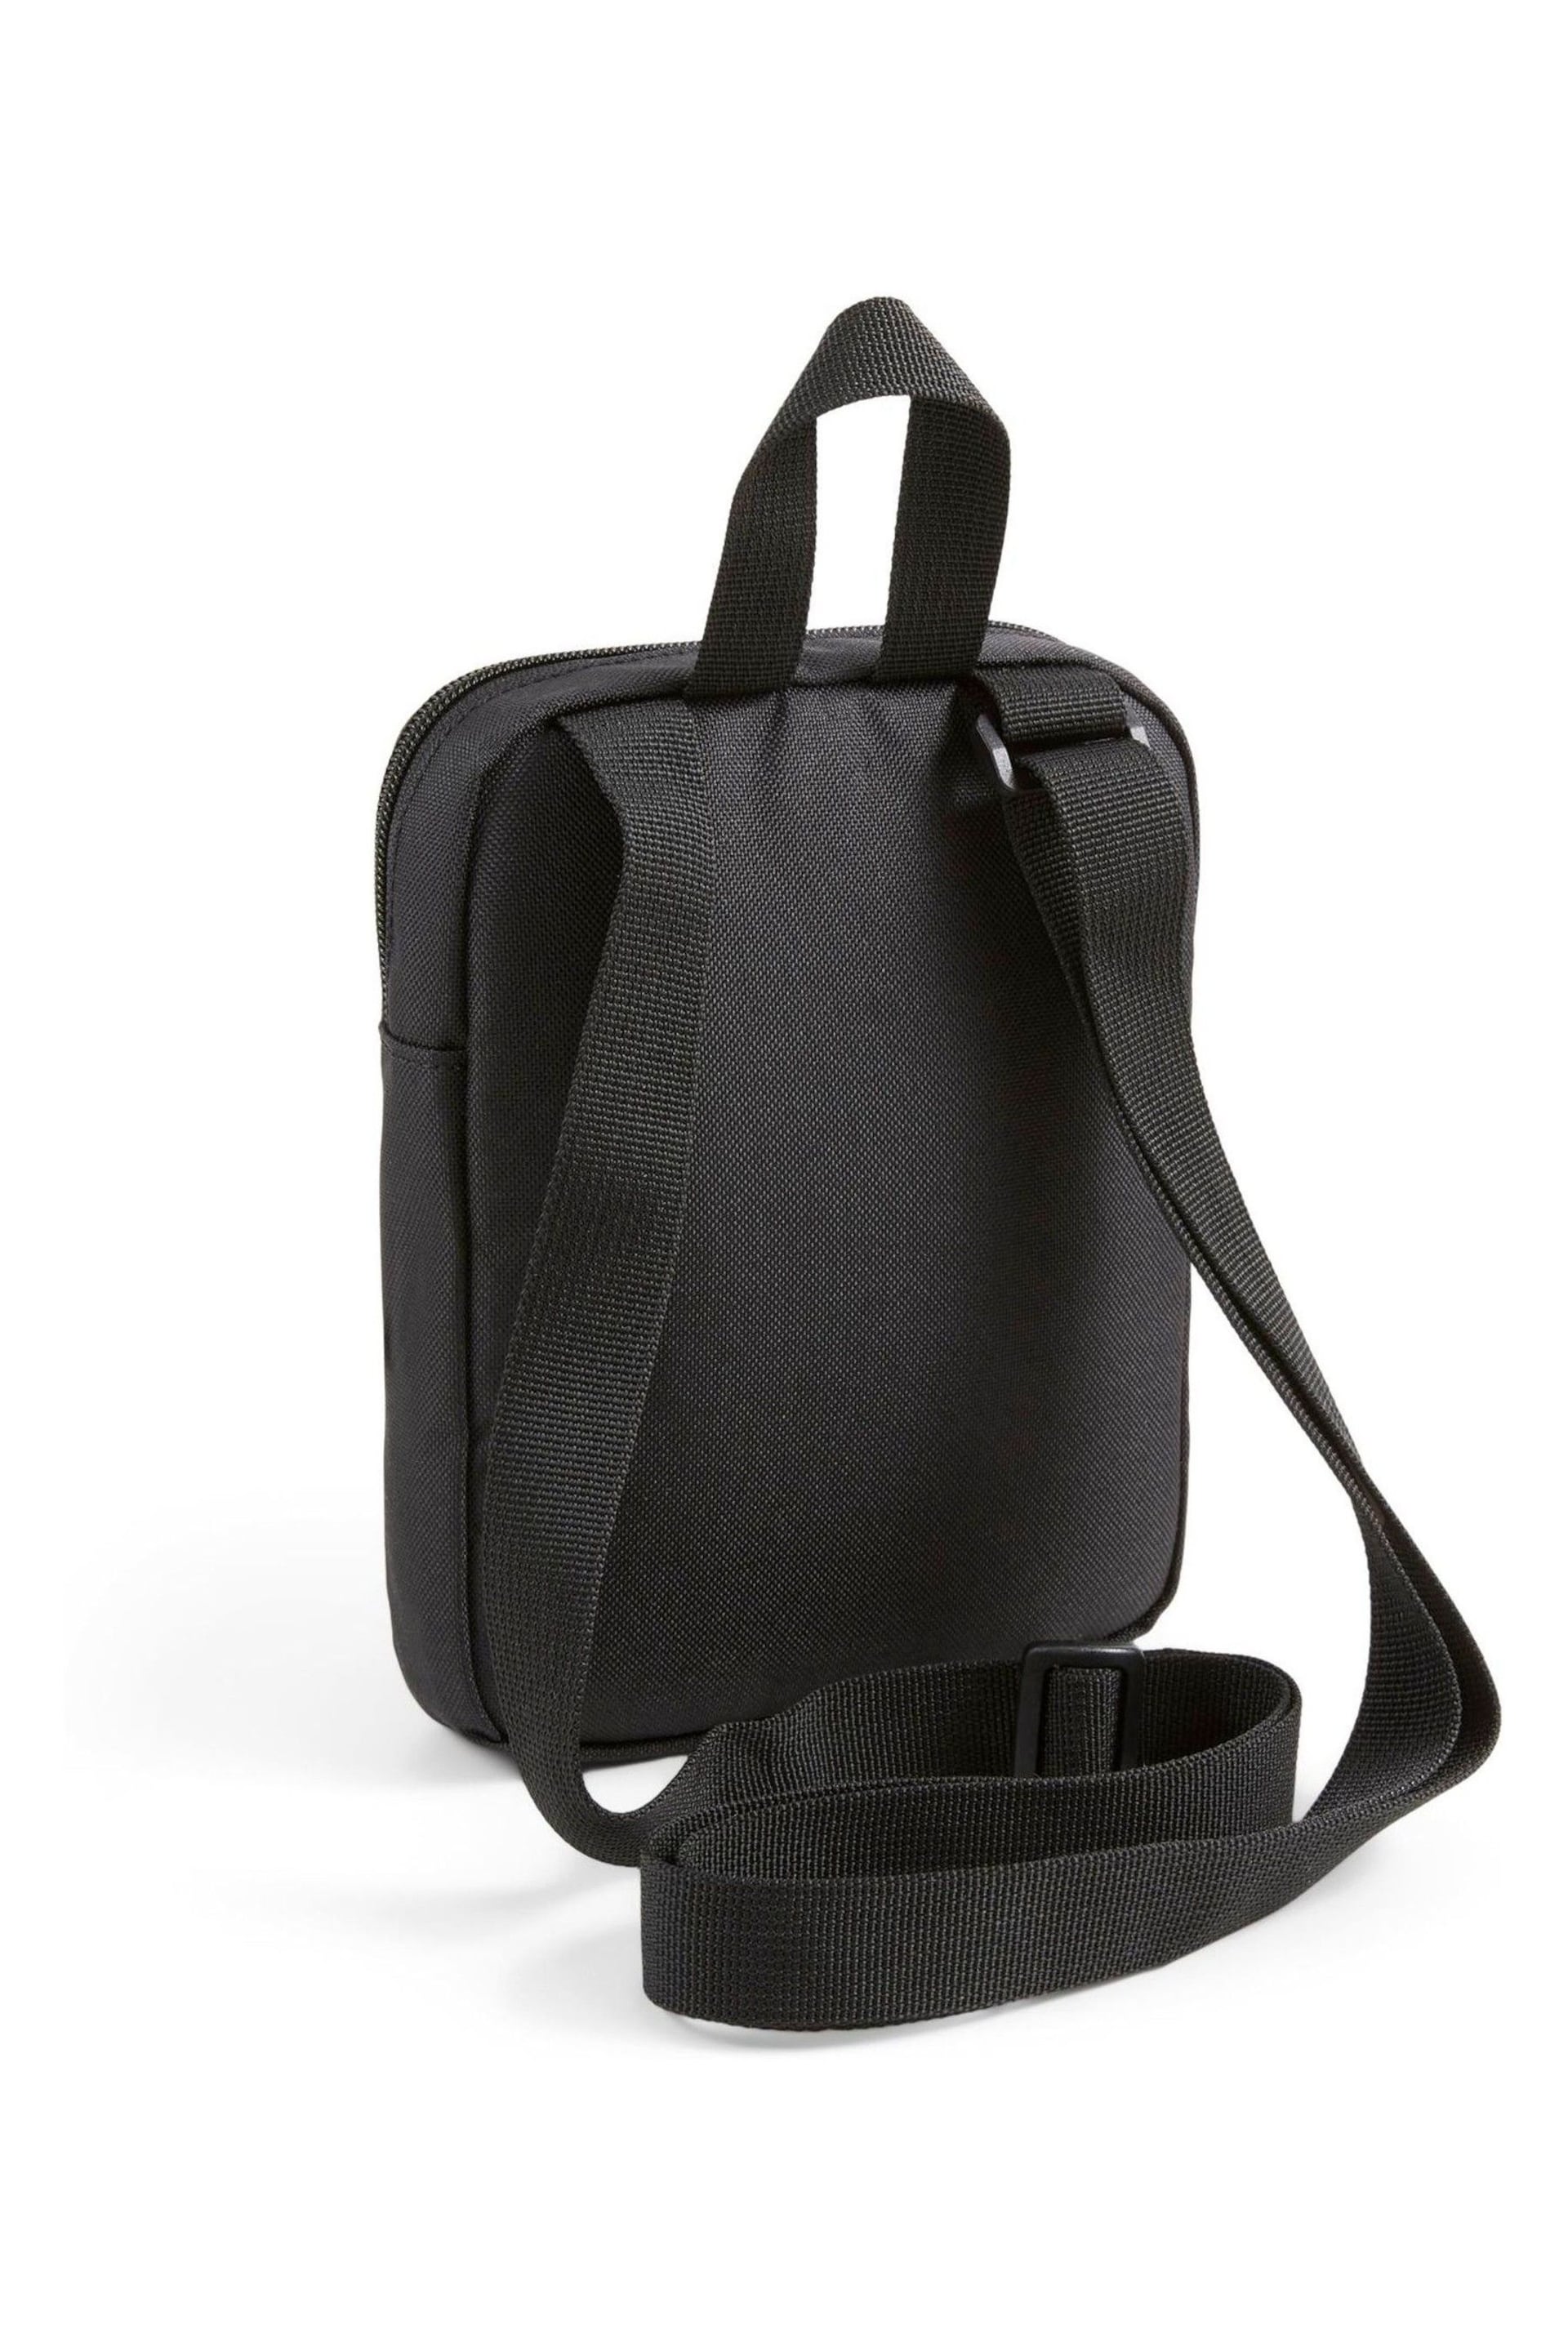 Puma Black Phase Portable Bag - Image 2 of 3